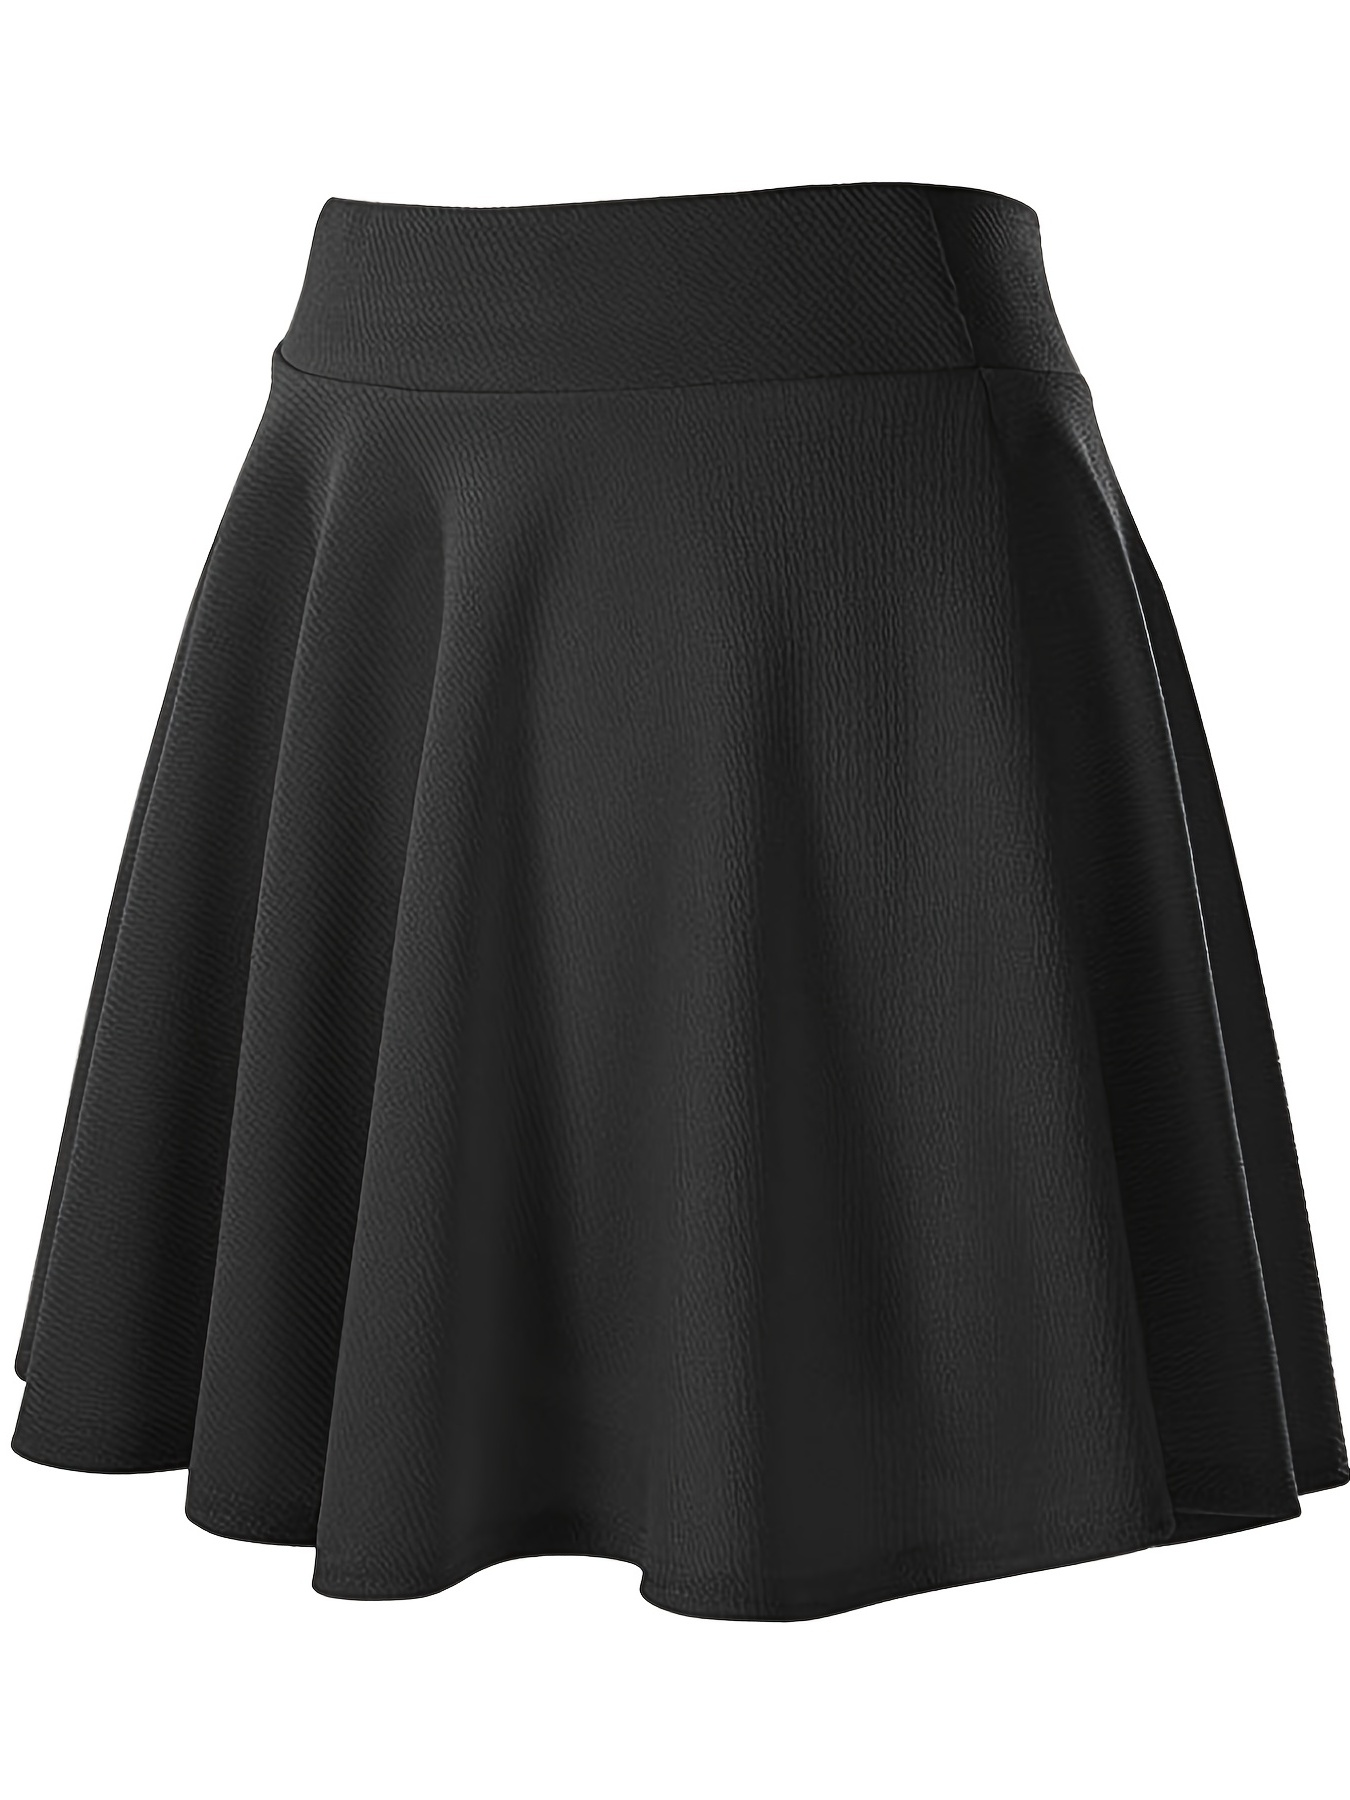 Women Clothes Skirts Black, Black Short Pleated Skirts